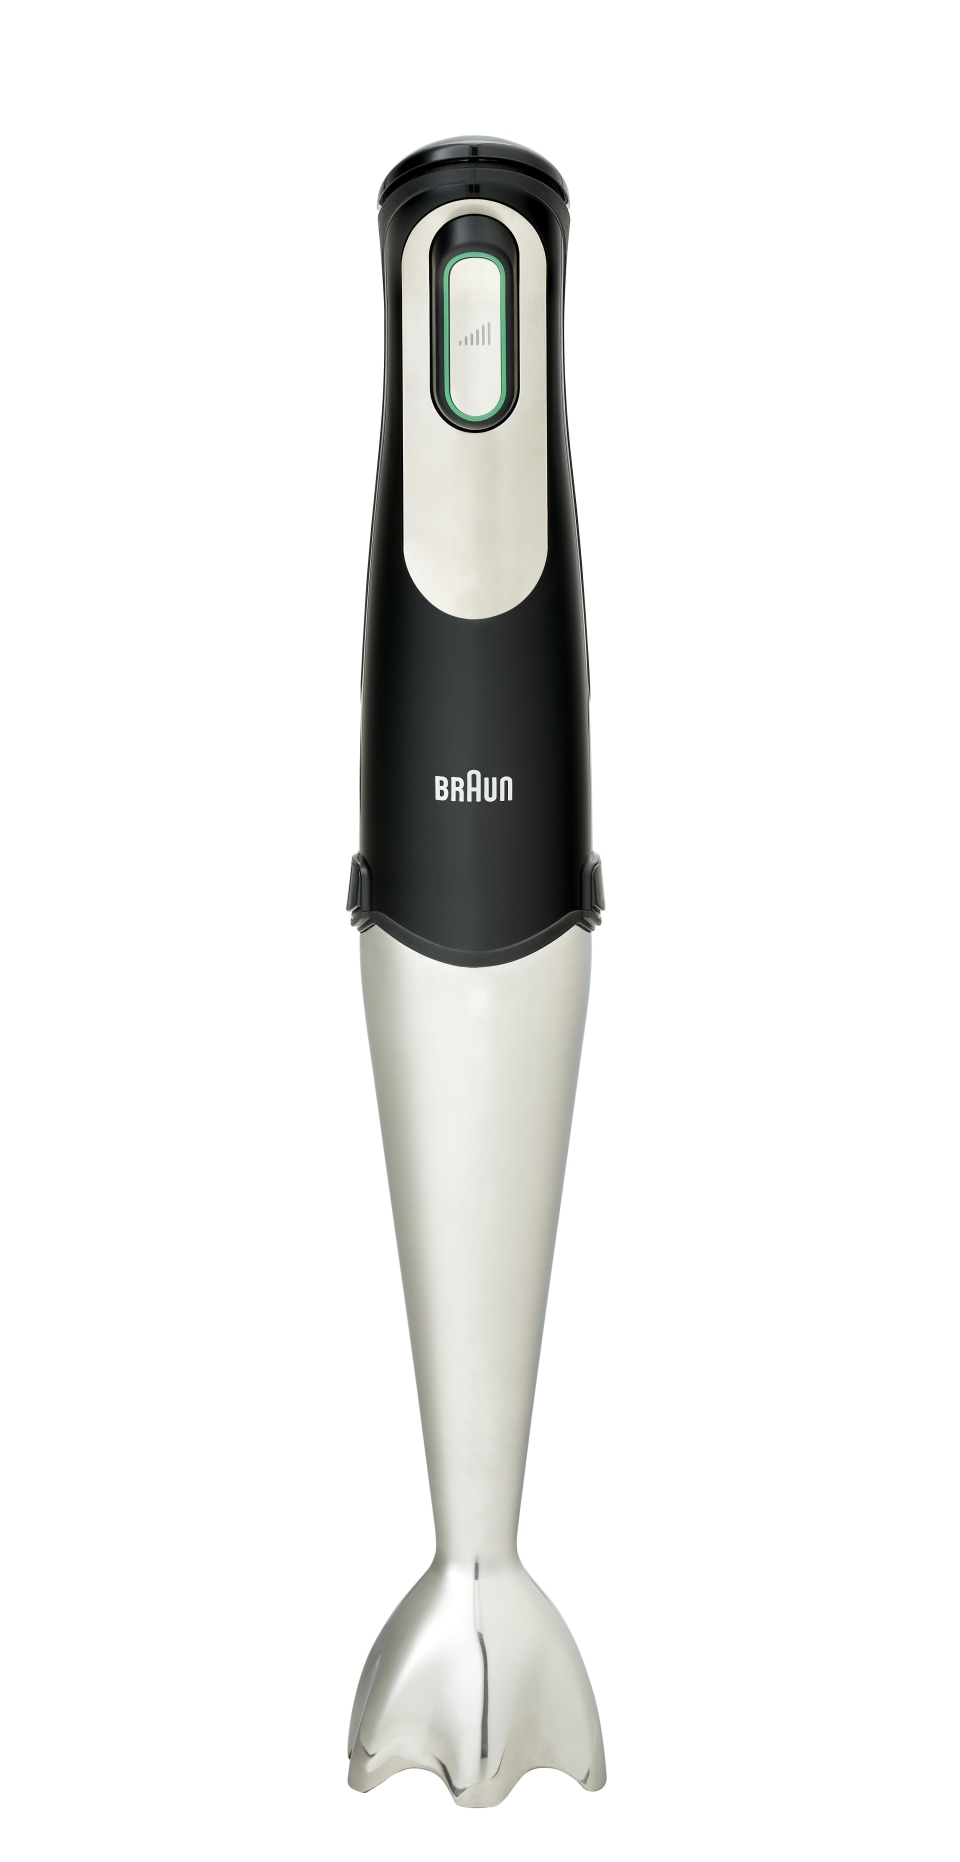 Best Buy: Braun Multiquick 7 Hand Blender Black/Silver MQ725